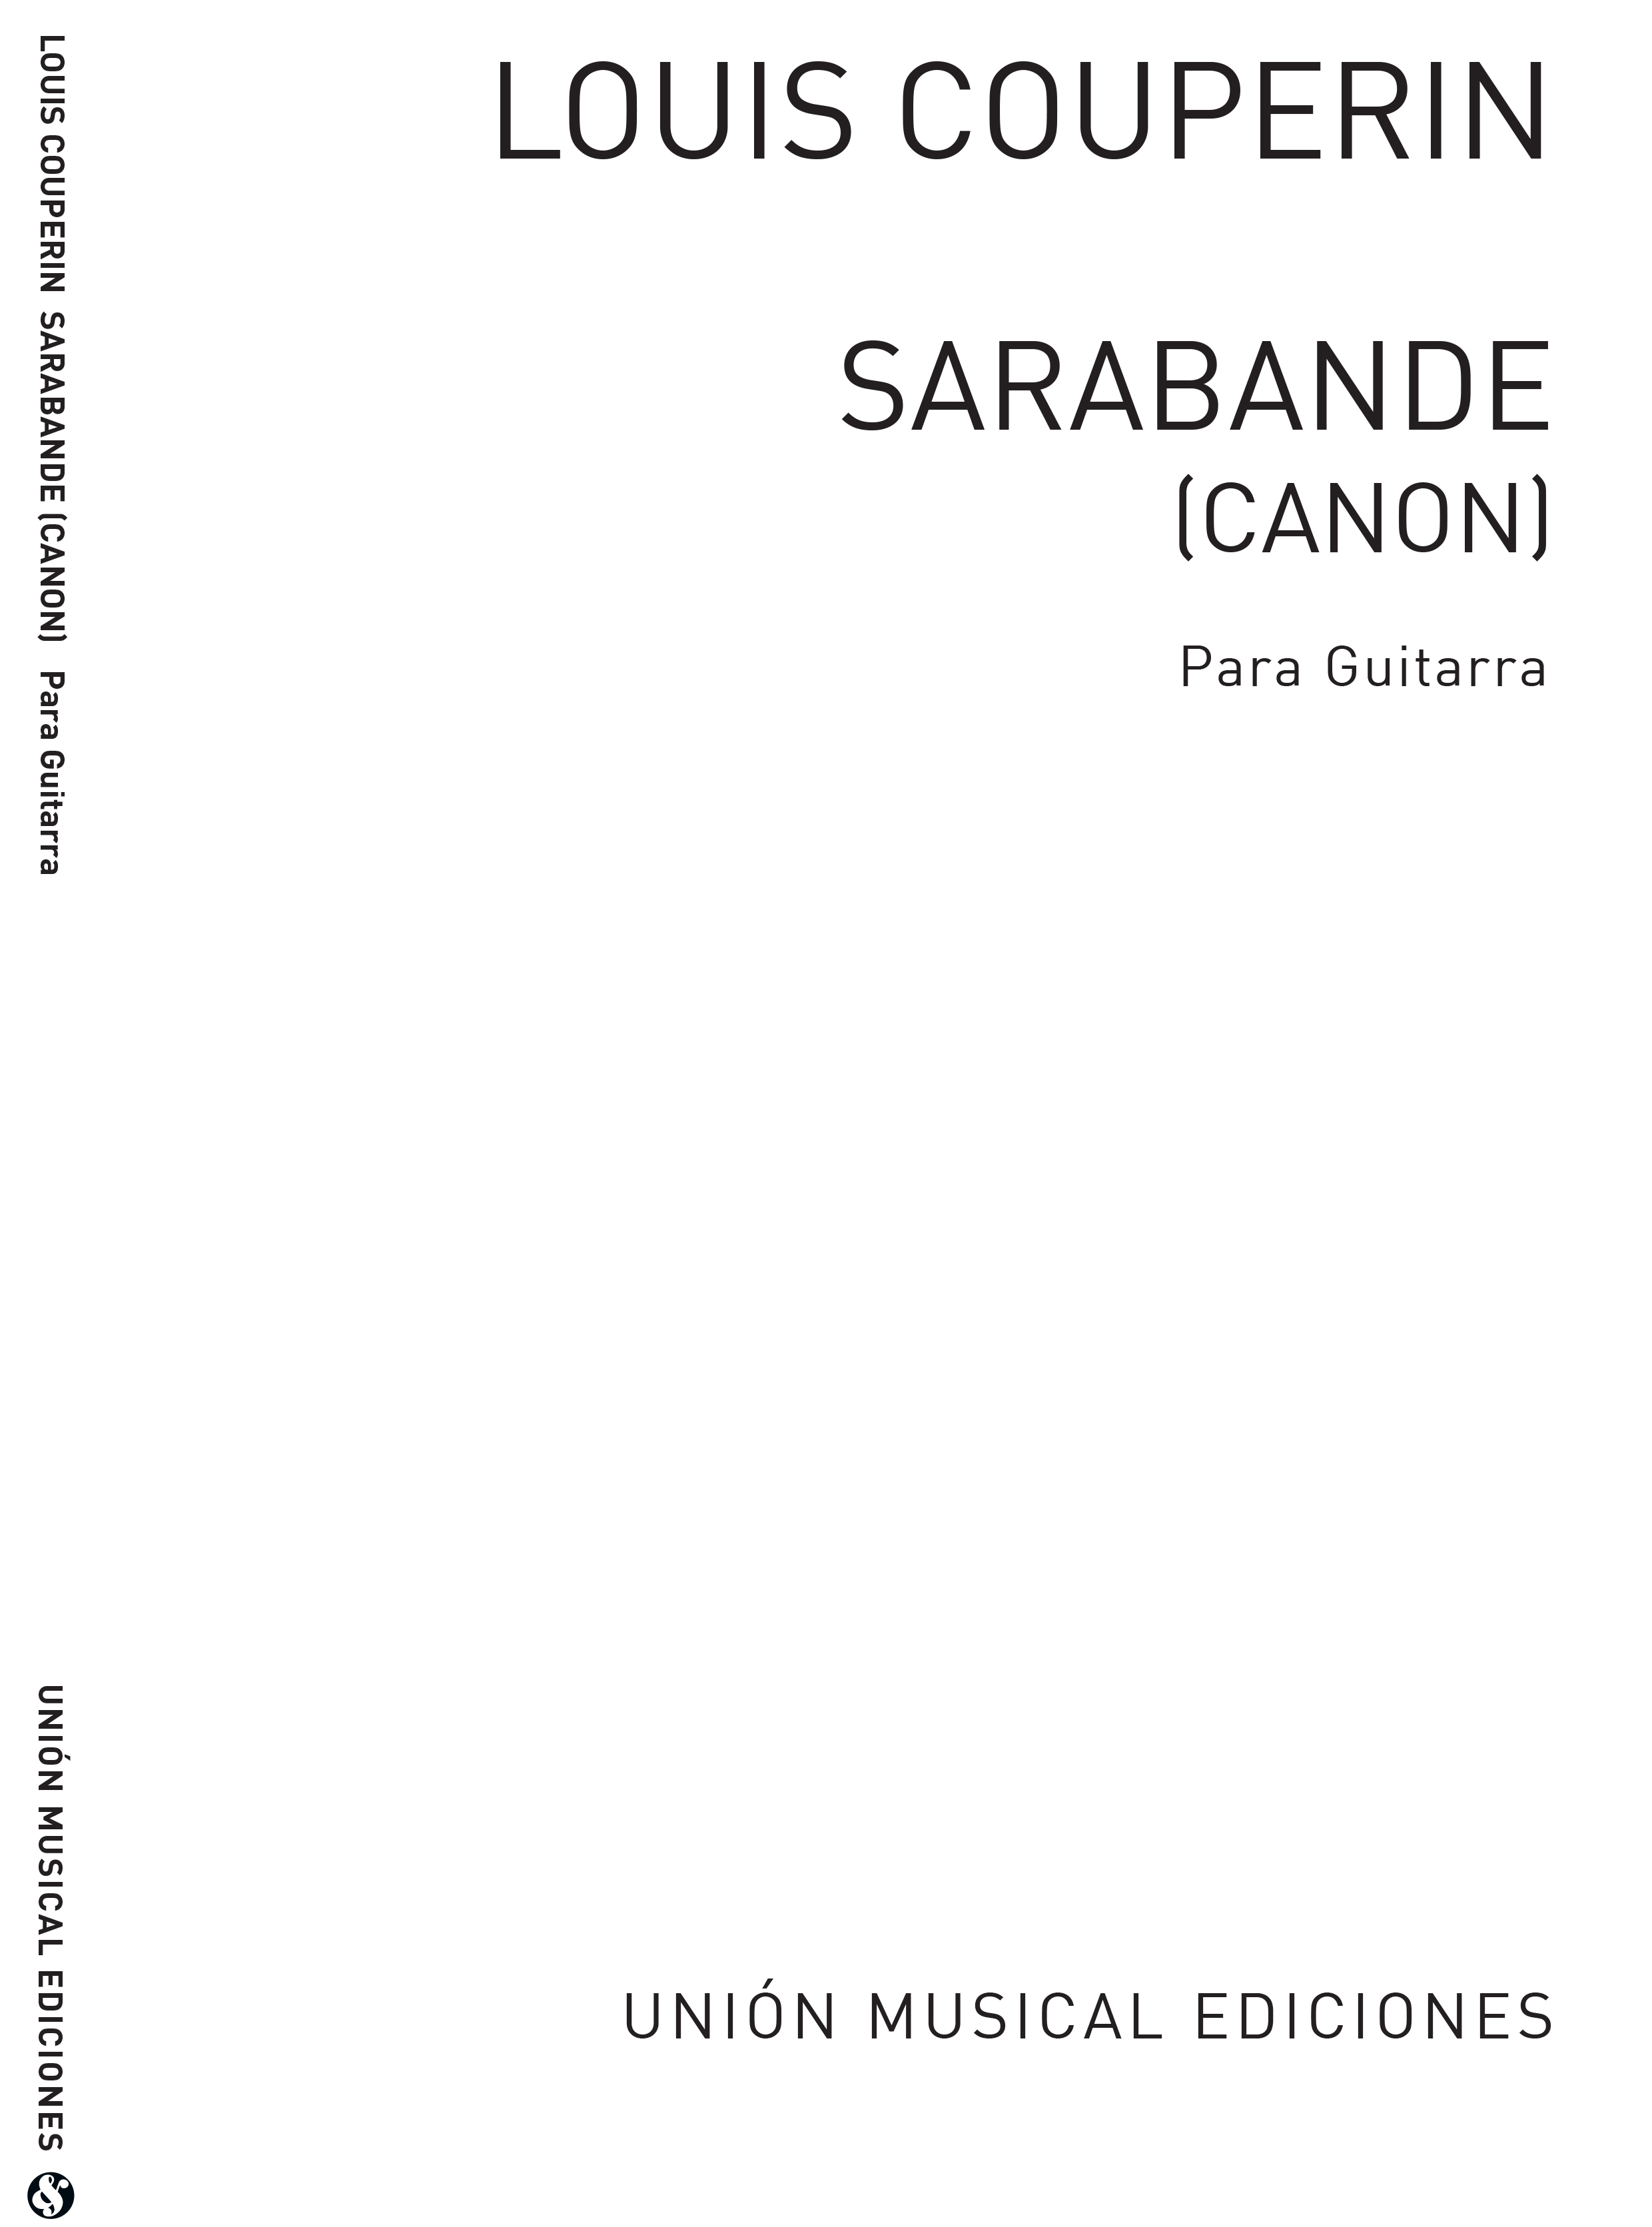 I. Couperin: Sarabande Canon: Guitar: Instrumental Work